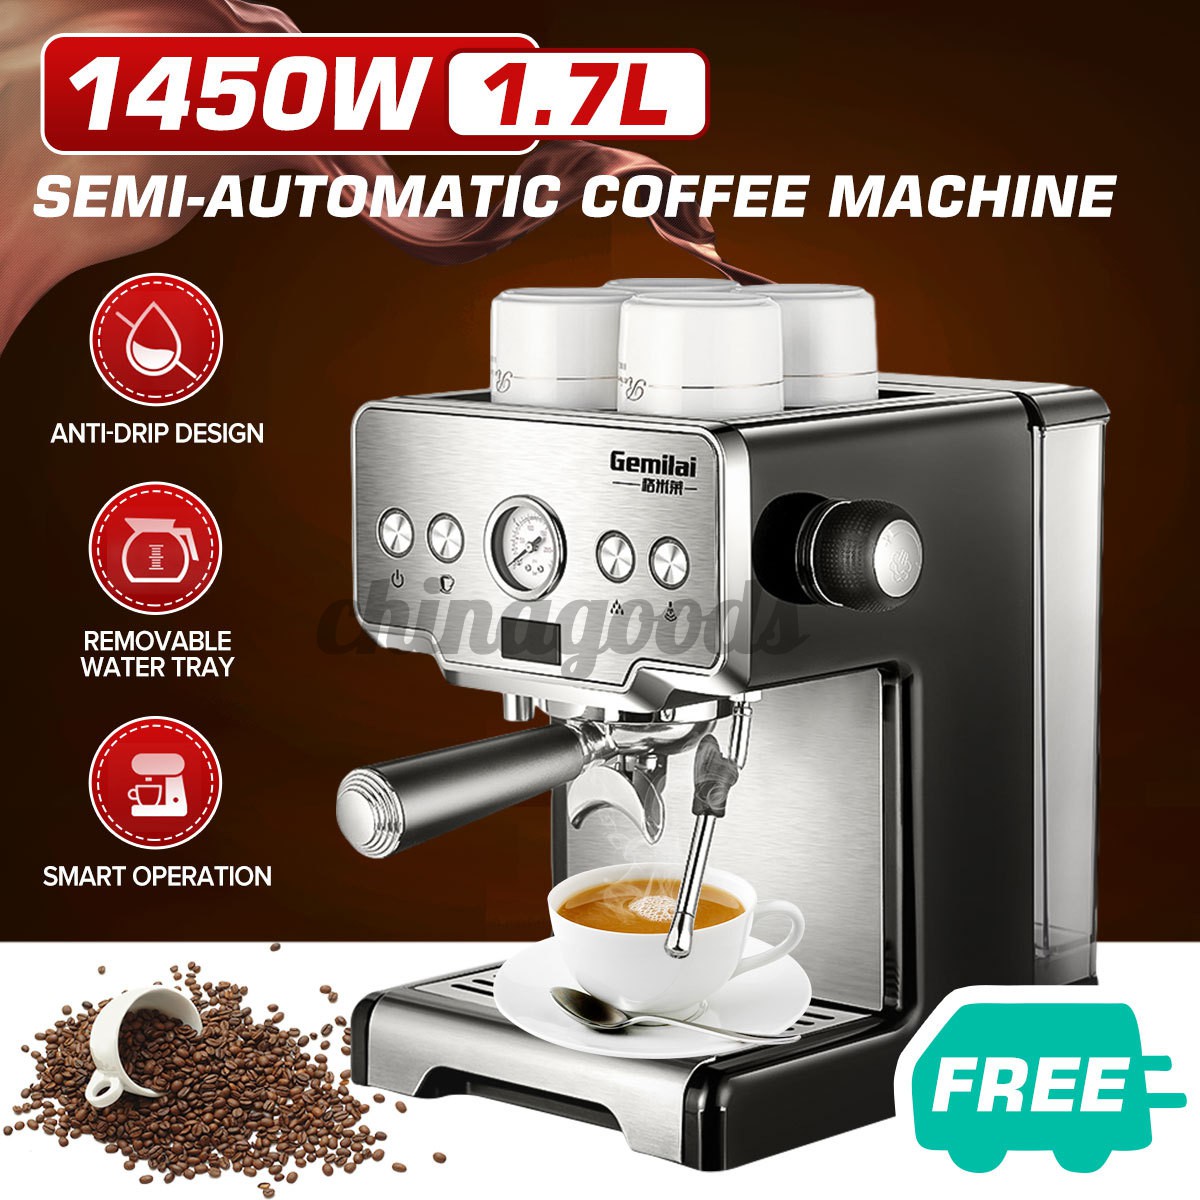 Gemilai Crm3605 Coffee Machine Bars Semi Automatic Commercial Italian Coffee Shopee Singapore